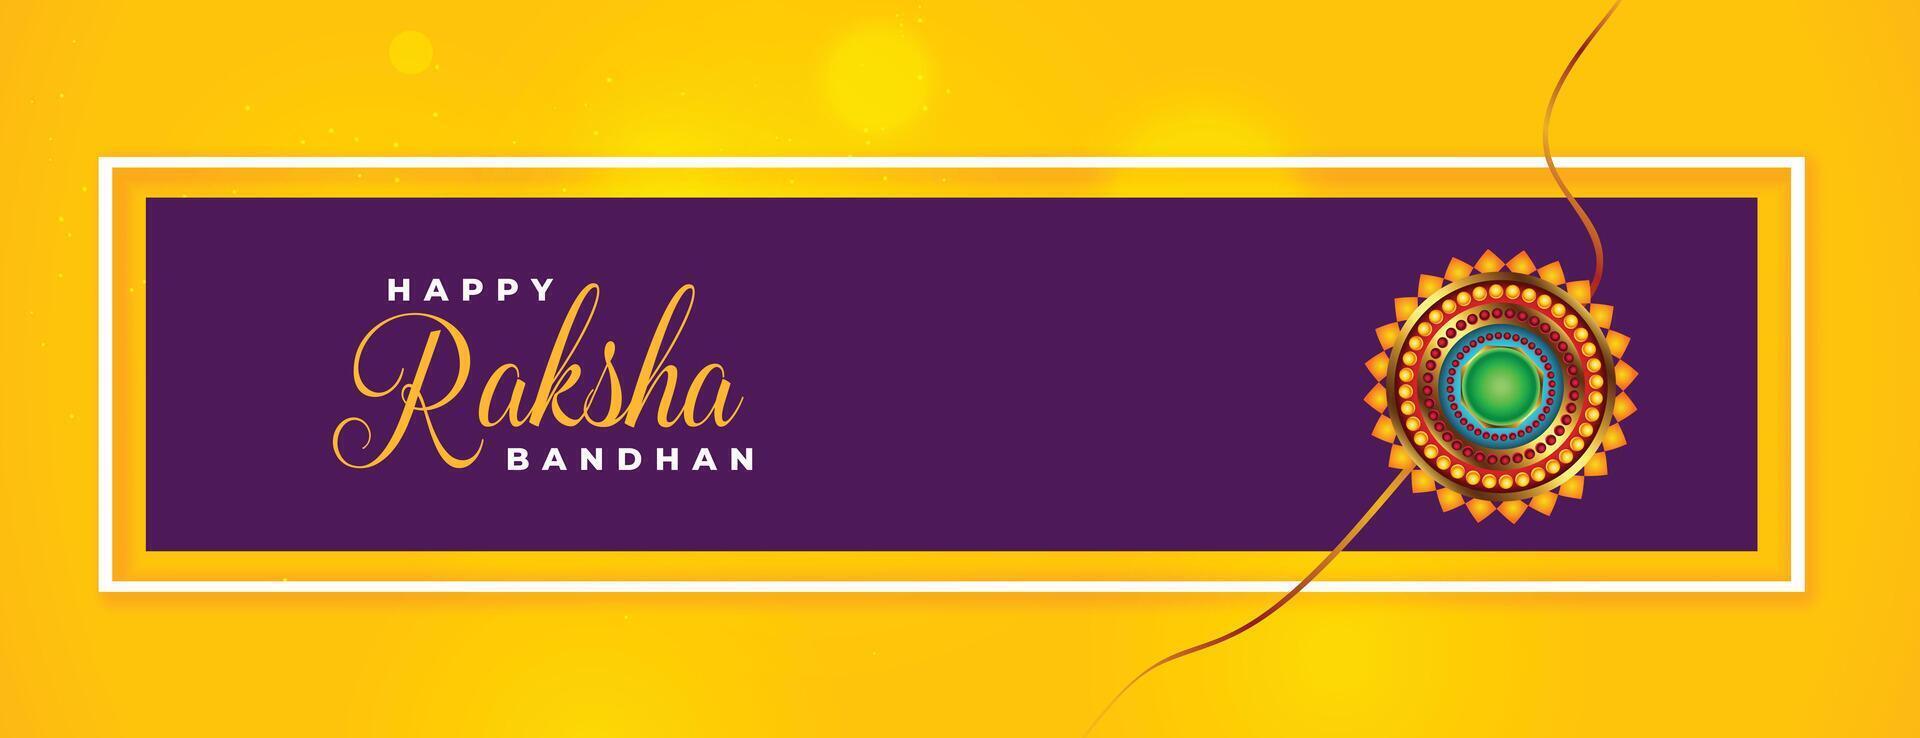 trevlig Lycklig Raksha bandhan traditionell gul baner design vektor